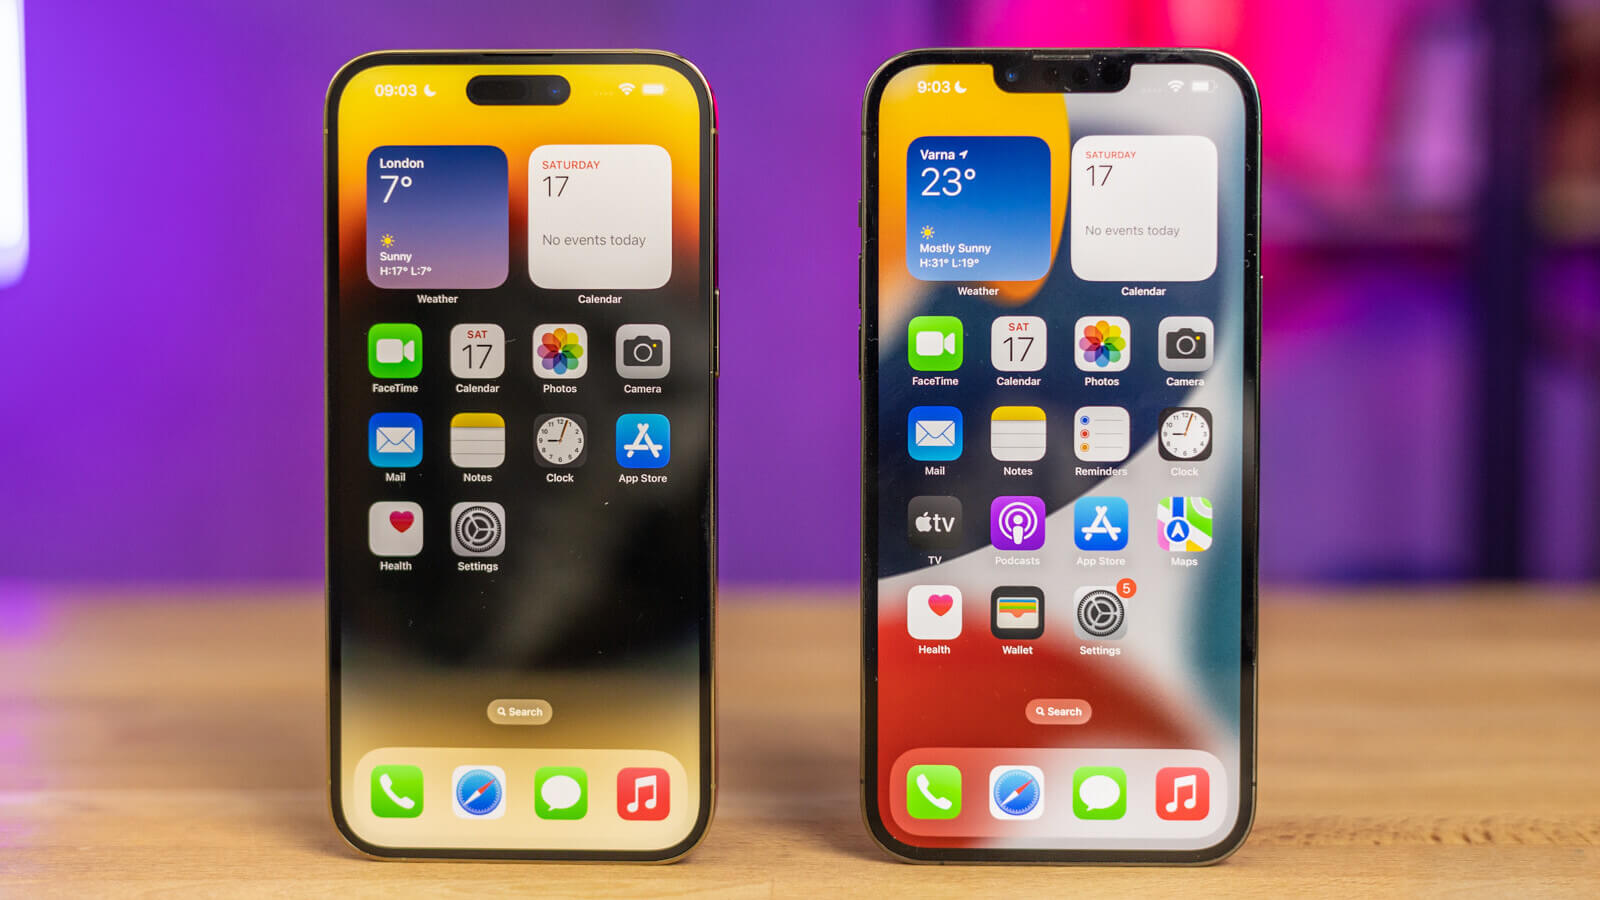 iPhone 14 Pro Max vs iPhone 13 Pro Max